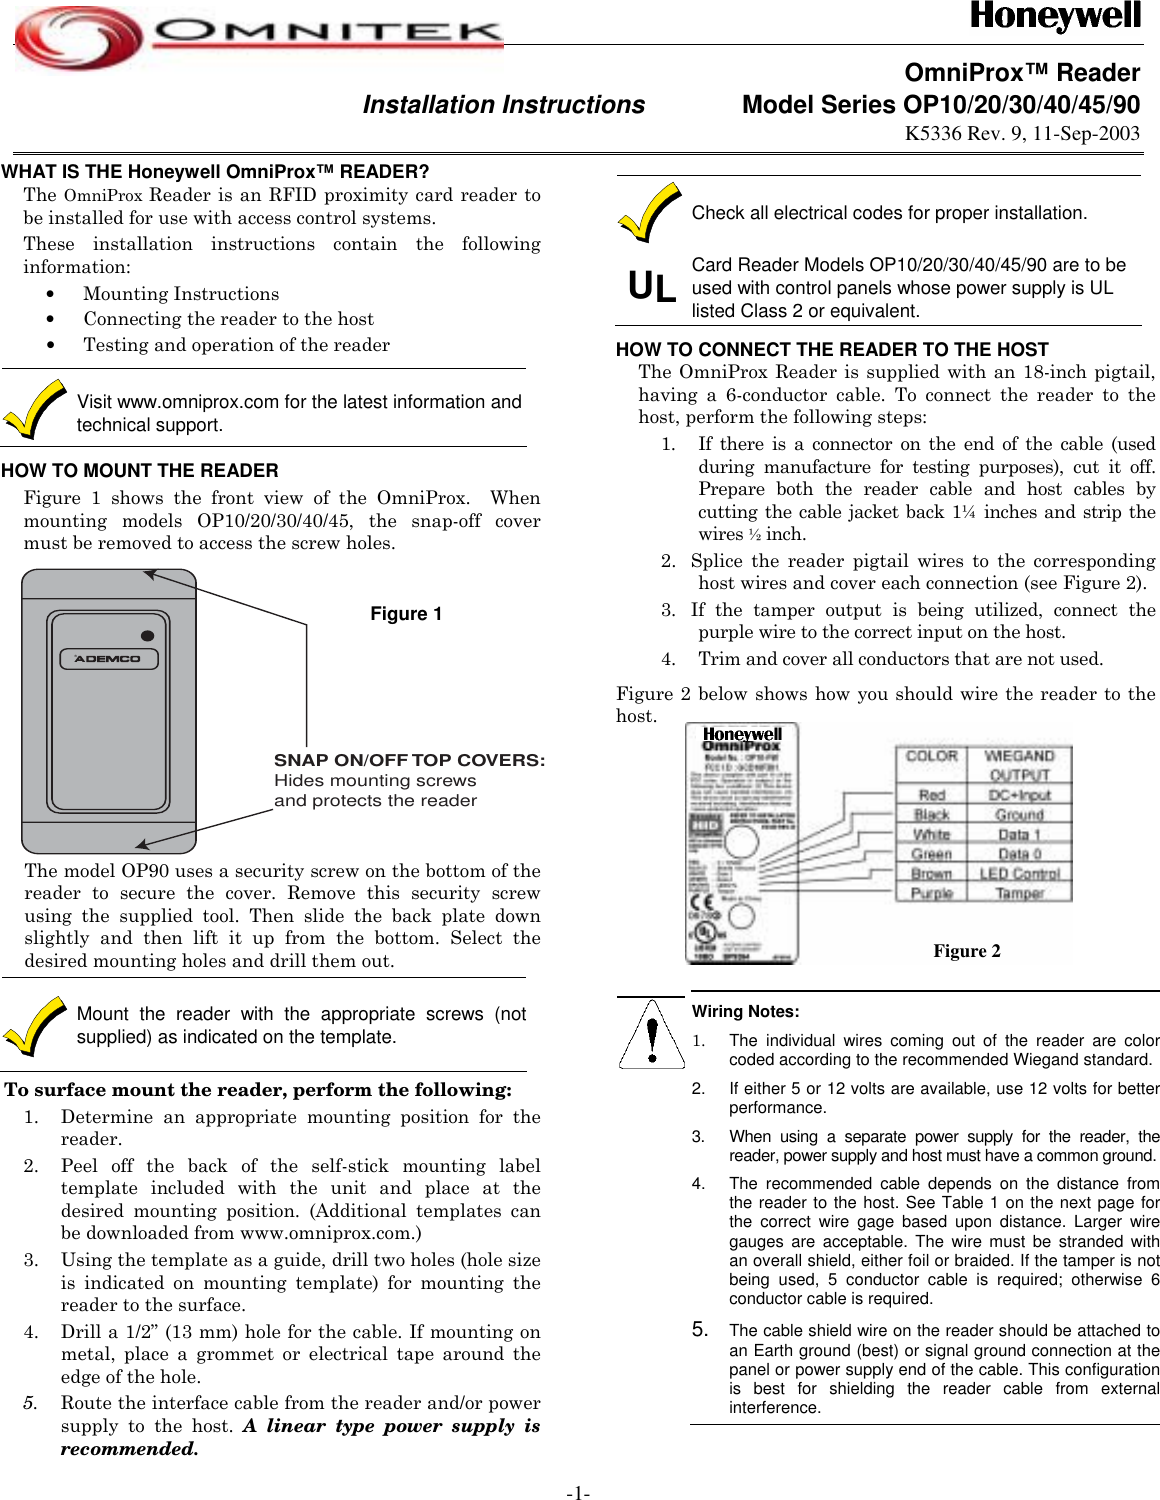 statistica 10 user manual pdf